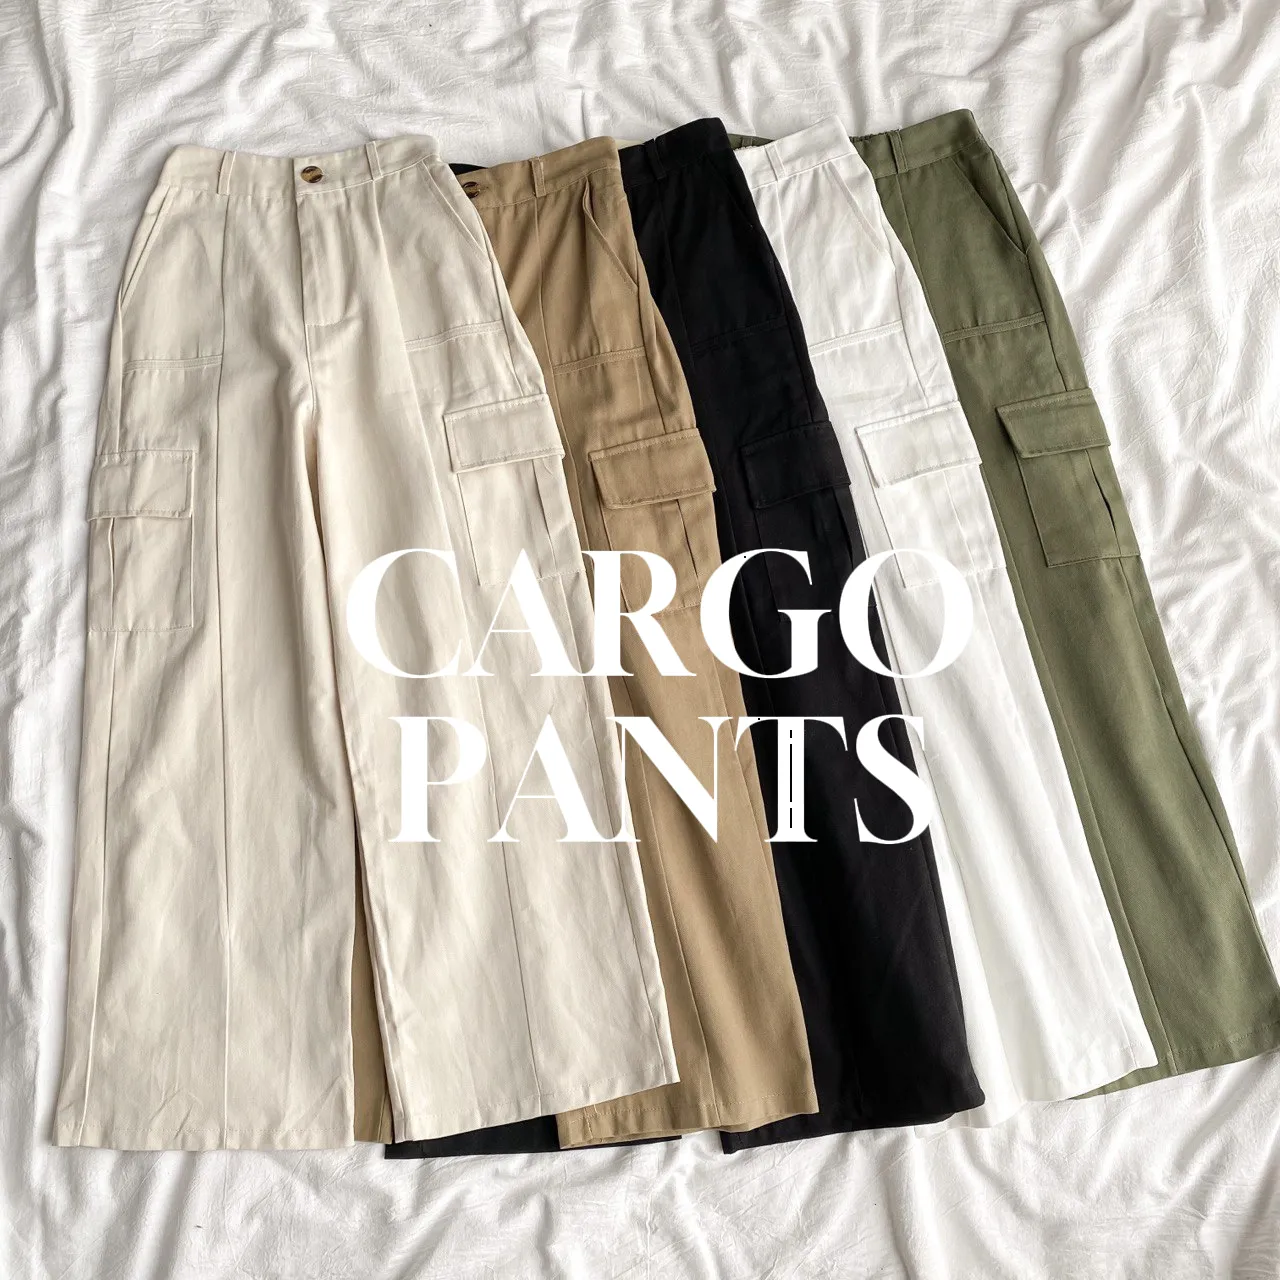 CARGO PANTS 👖 | Gallery posted by bajuraya_gadis | Lemon8